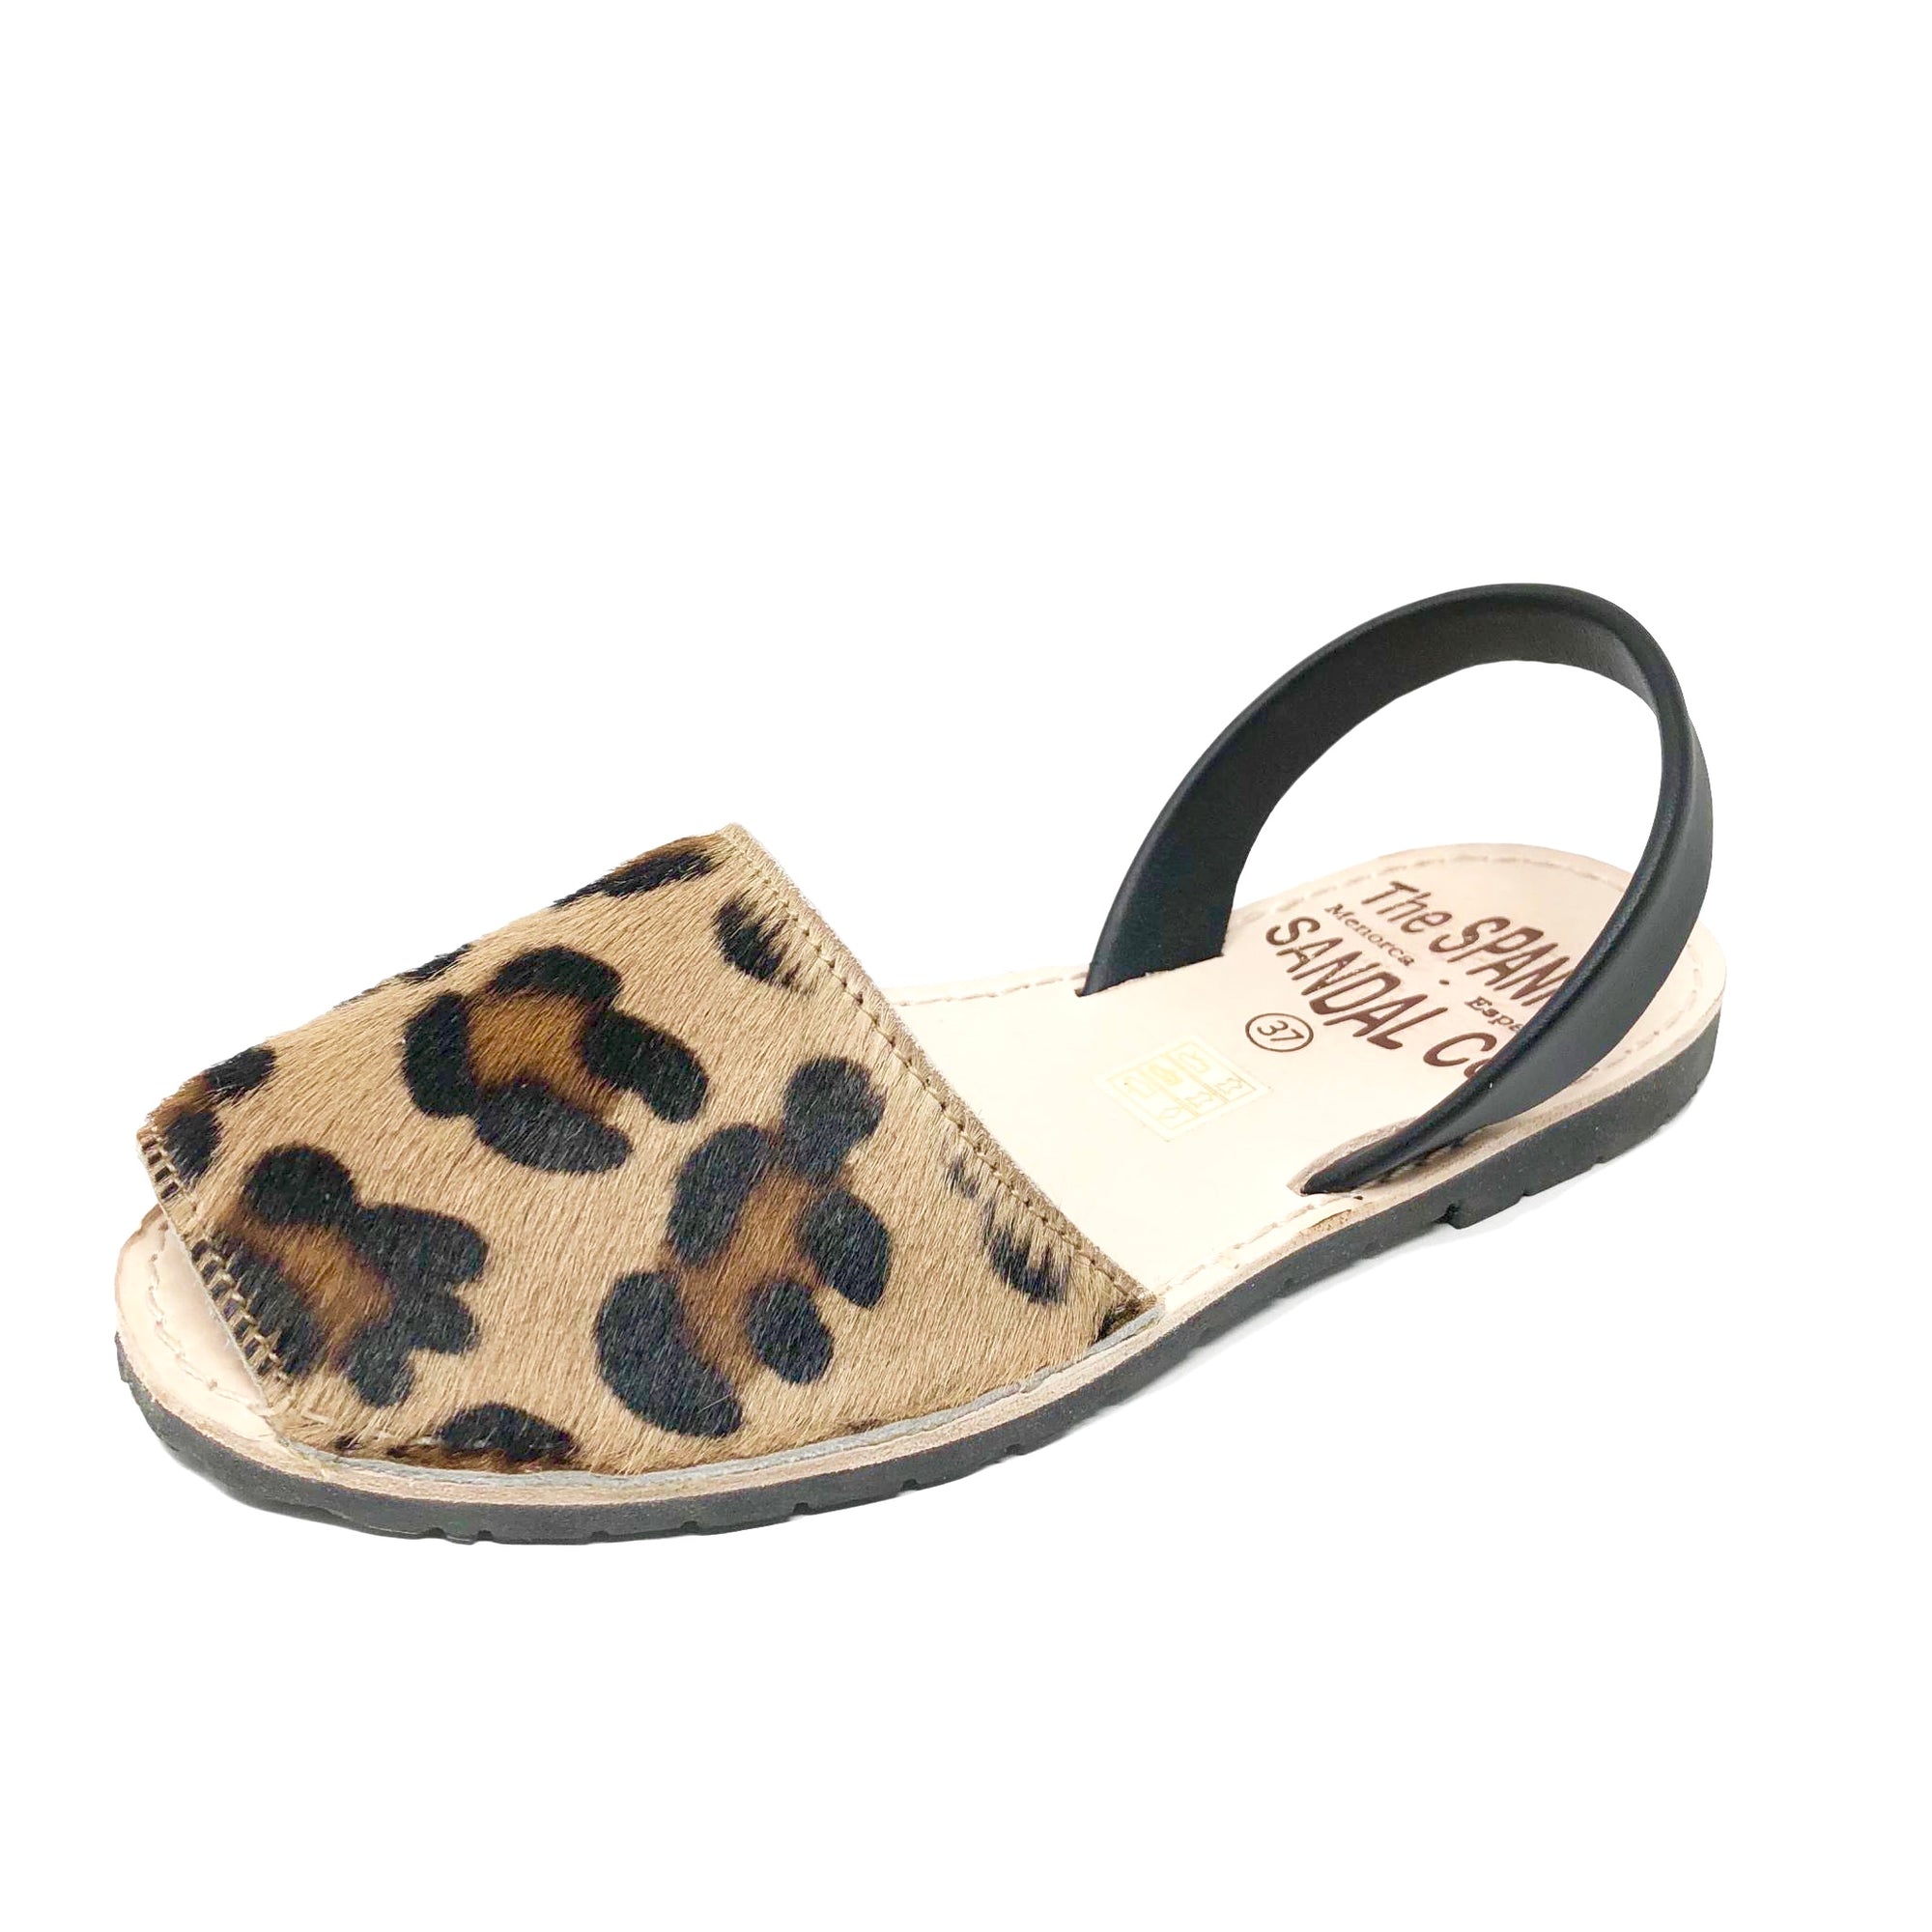 Leopard print sandals